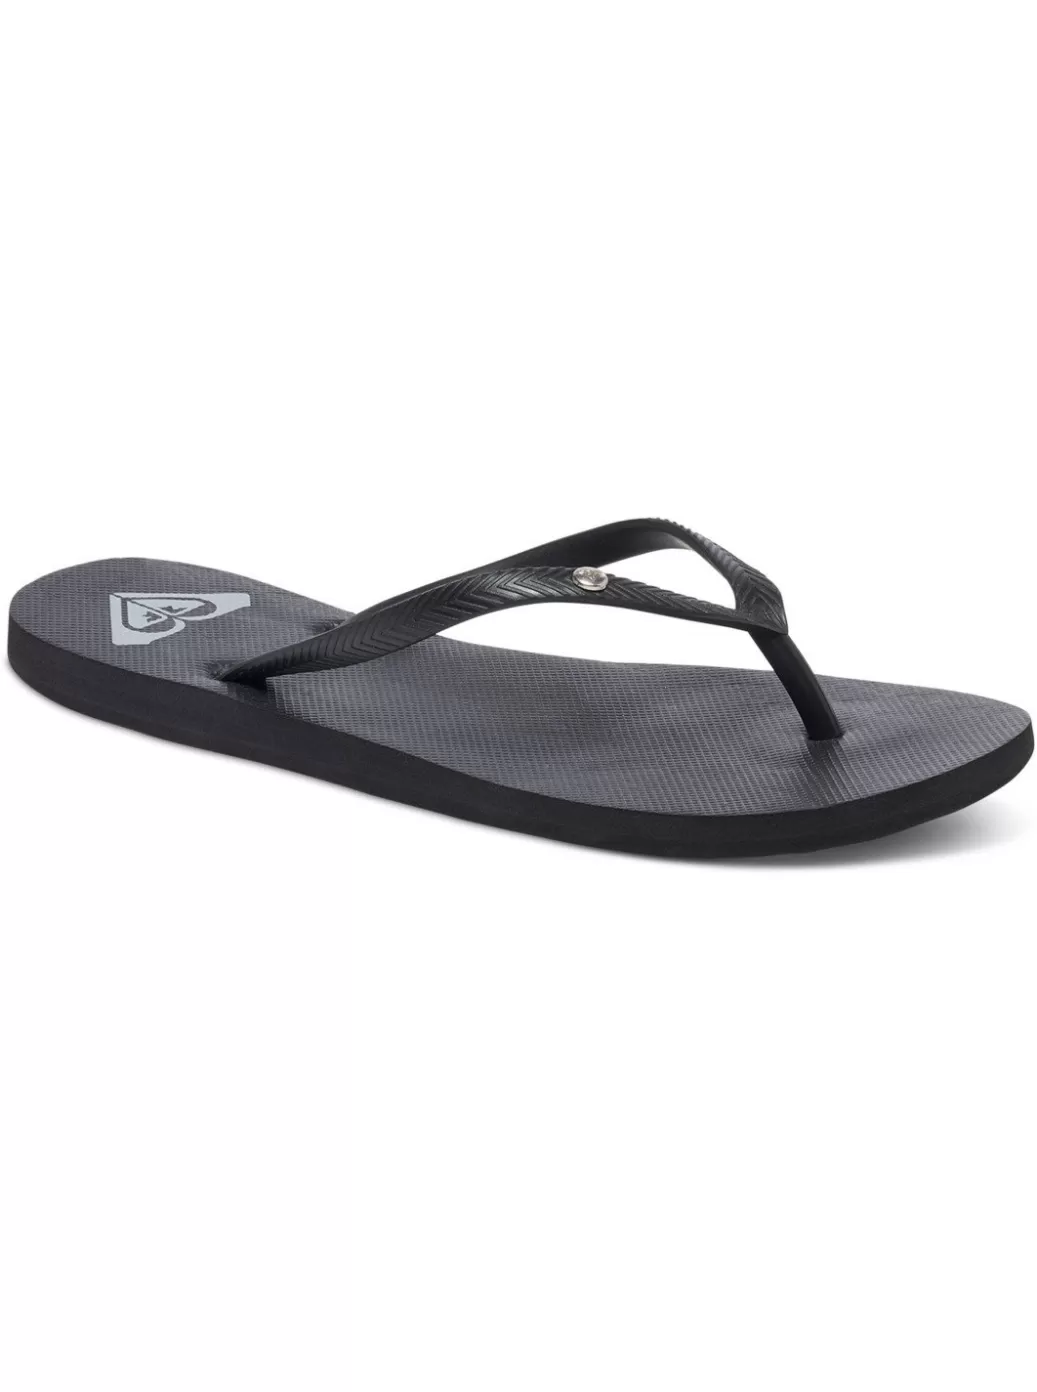 Flip Flops | WOMEN ROXY Bermuda Sandals Black 3